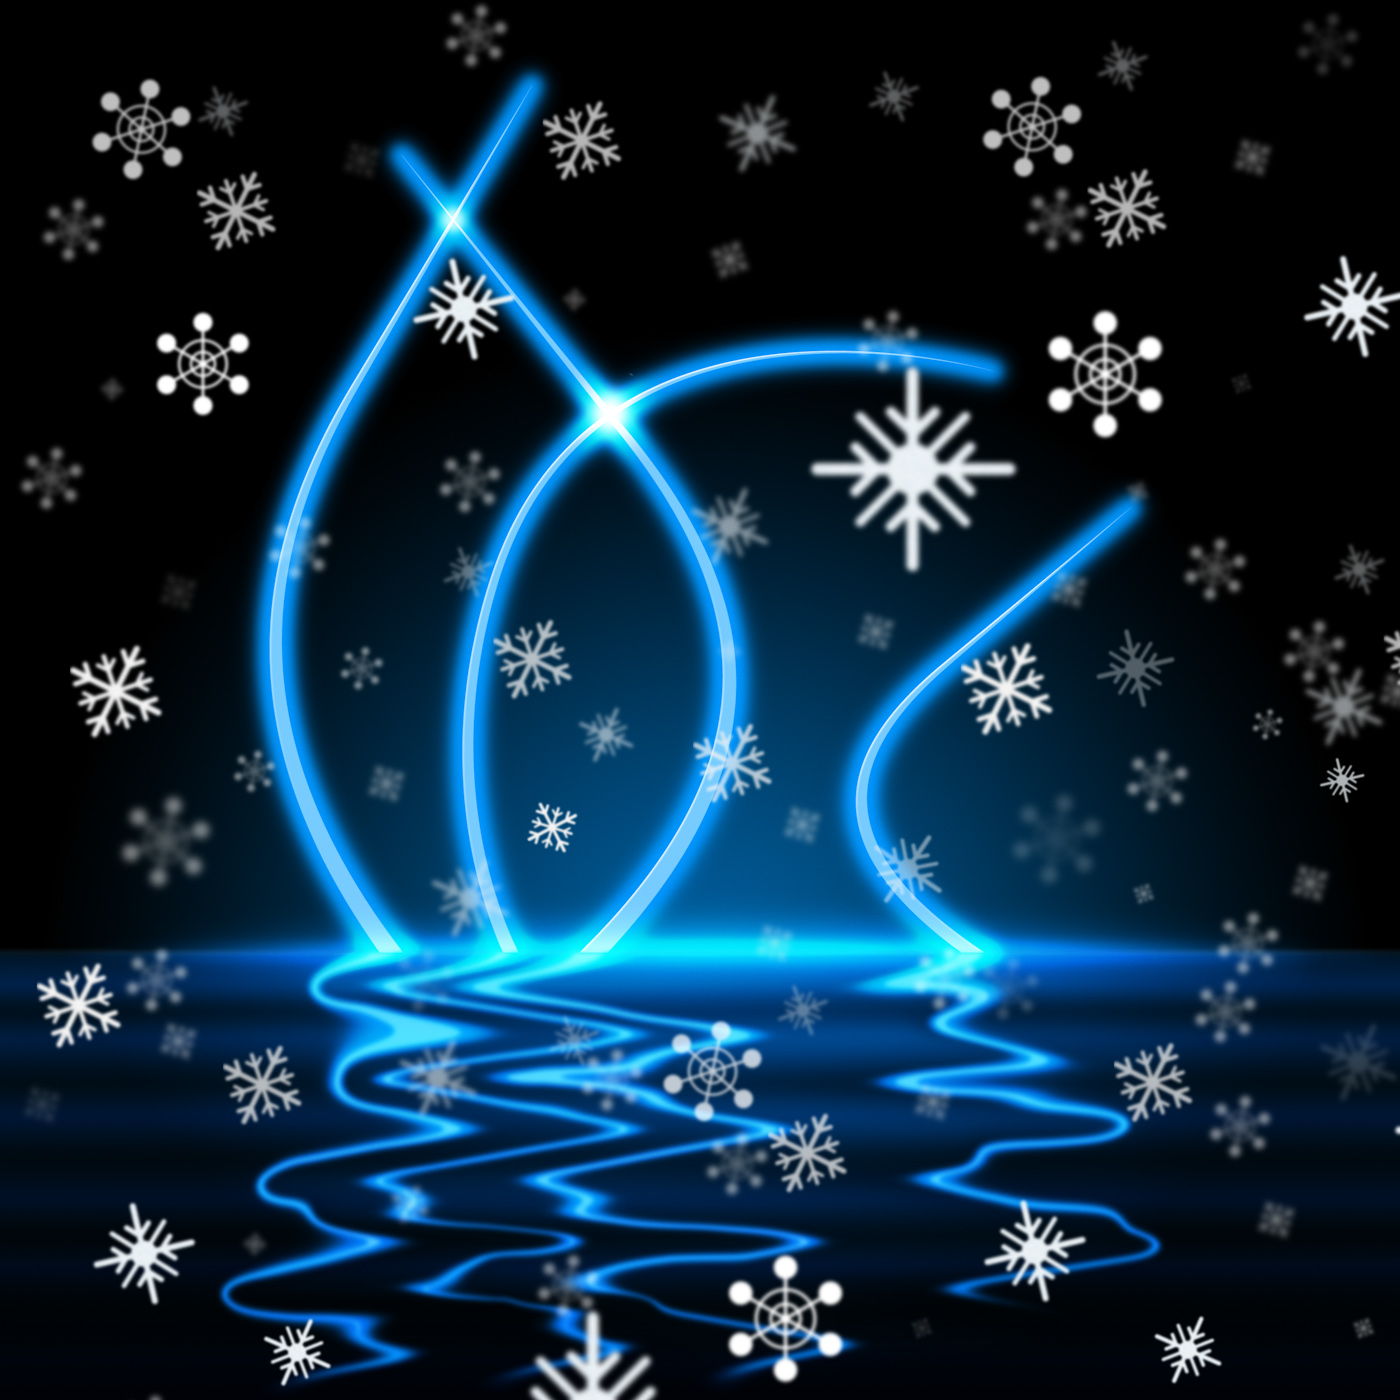 Snowflake lake represents merry christmas and blazing photo